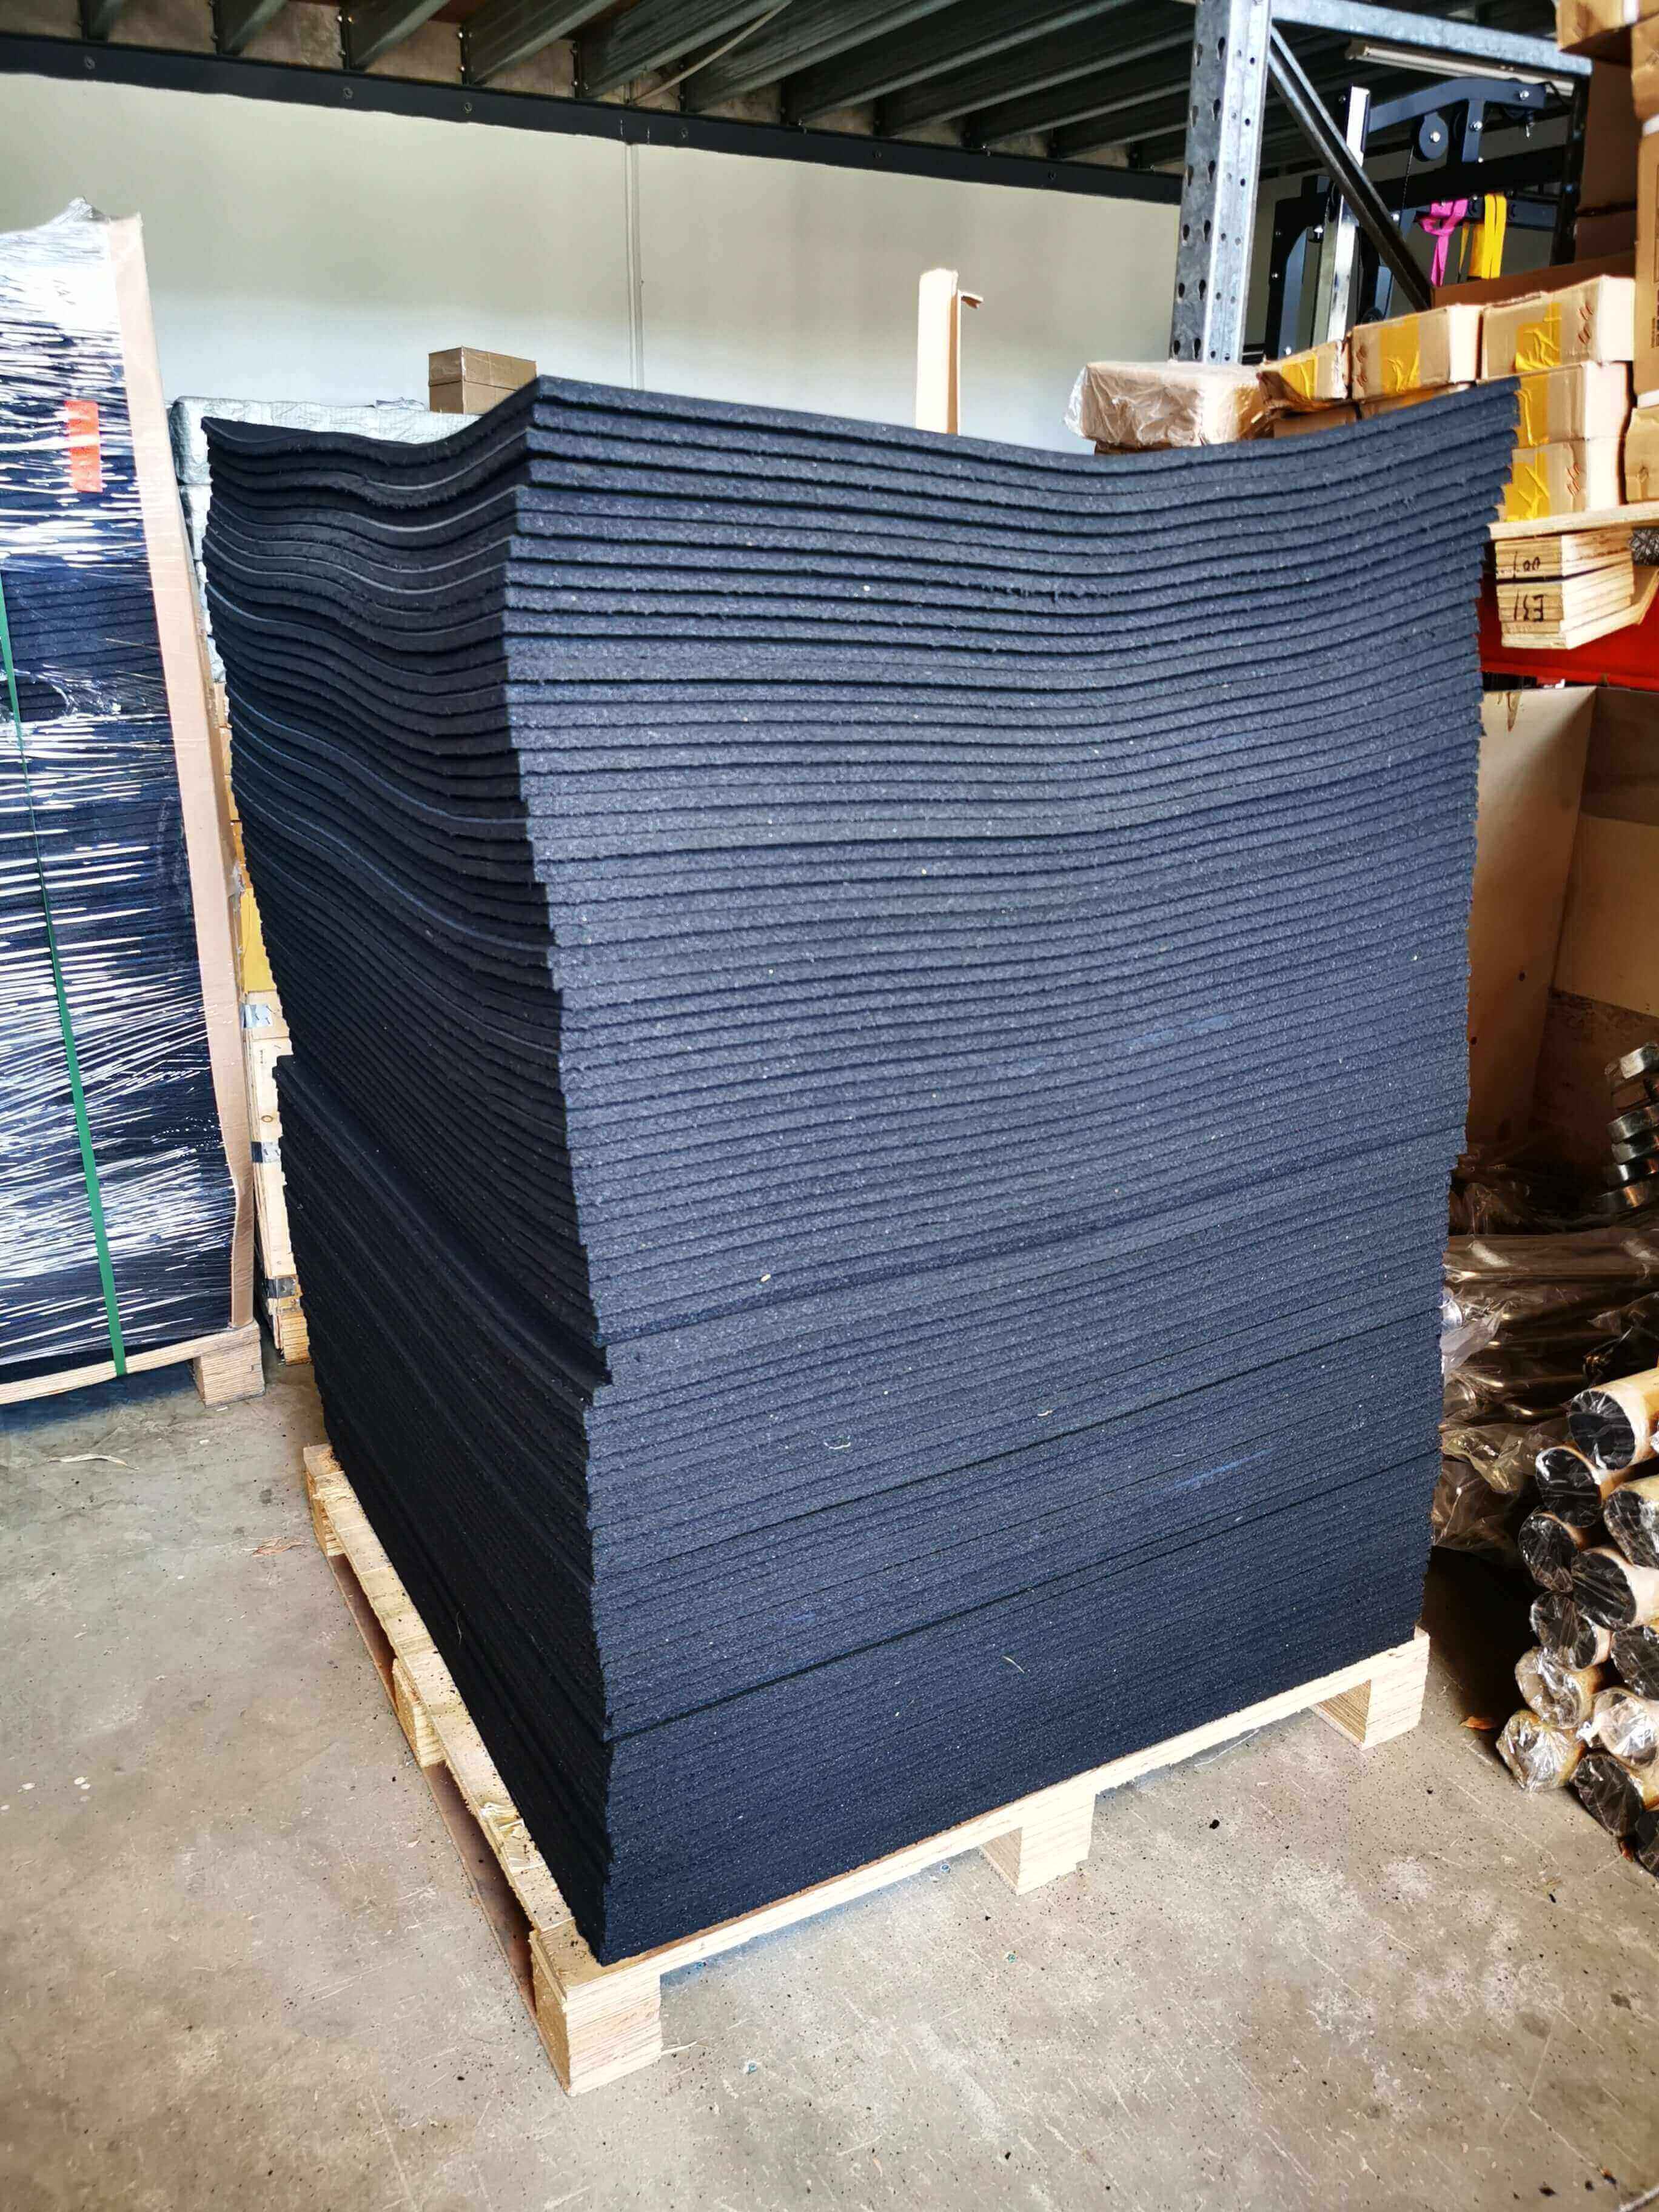 10 Pack 15mm Rubber Gym Flooring BLACK with BLUE Fleck Dense Tile Mat 1m x 1m | INSOURCE